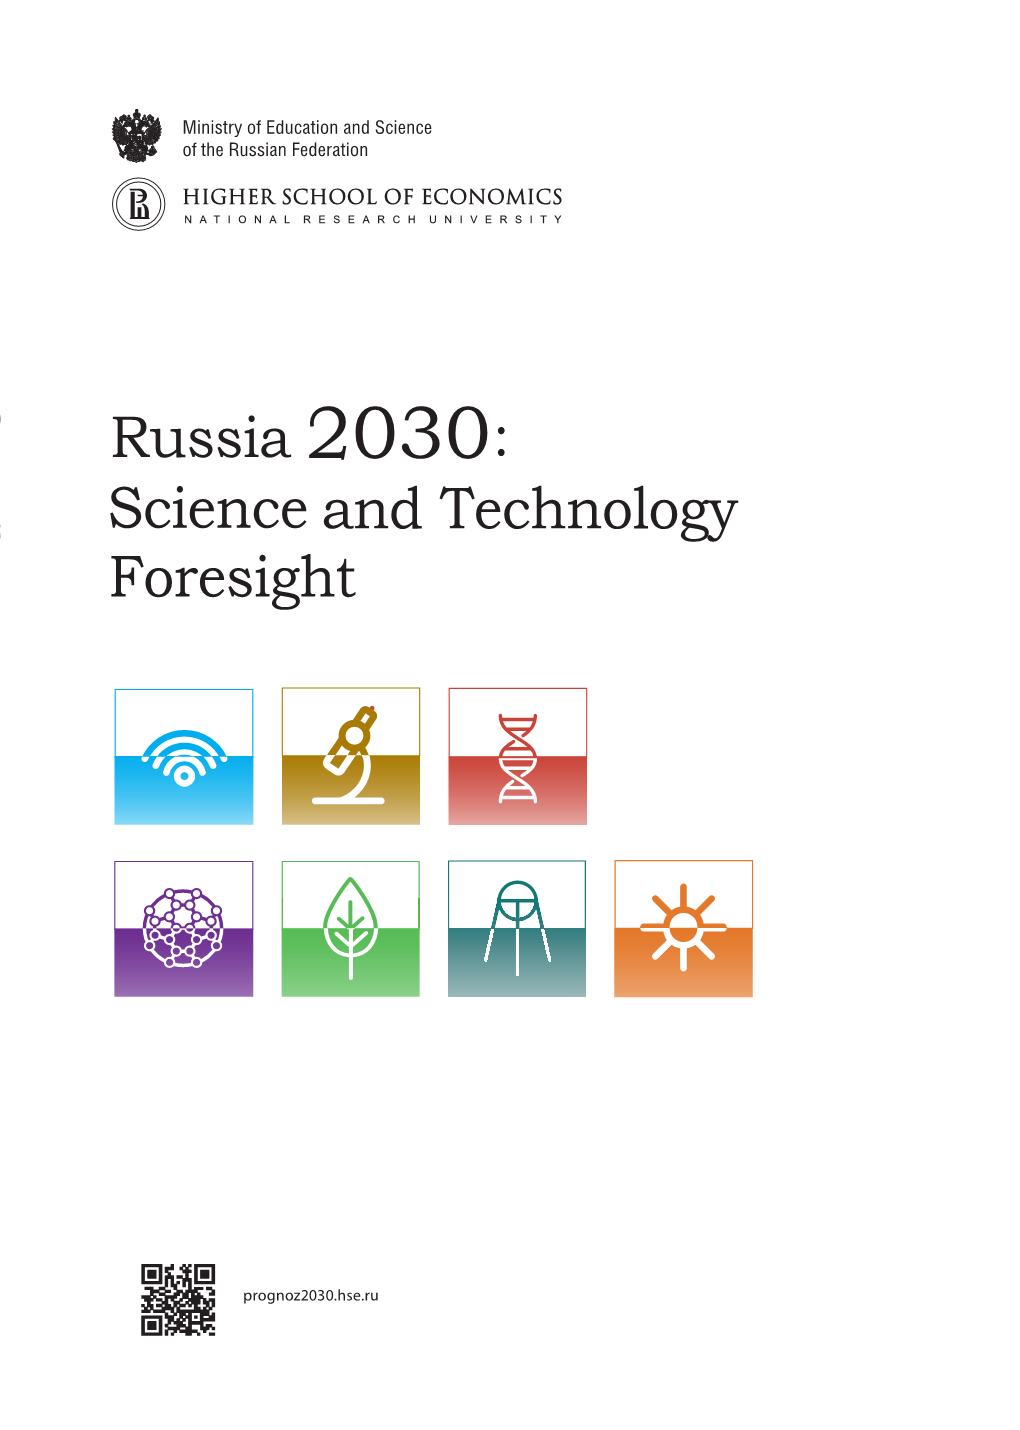 Russian S&T Foresight 2030 (PDF)